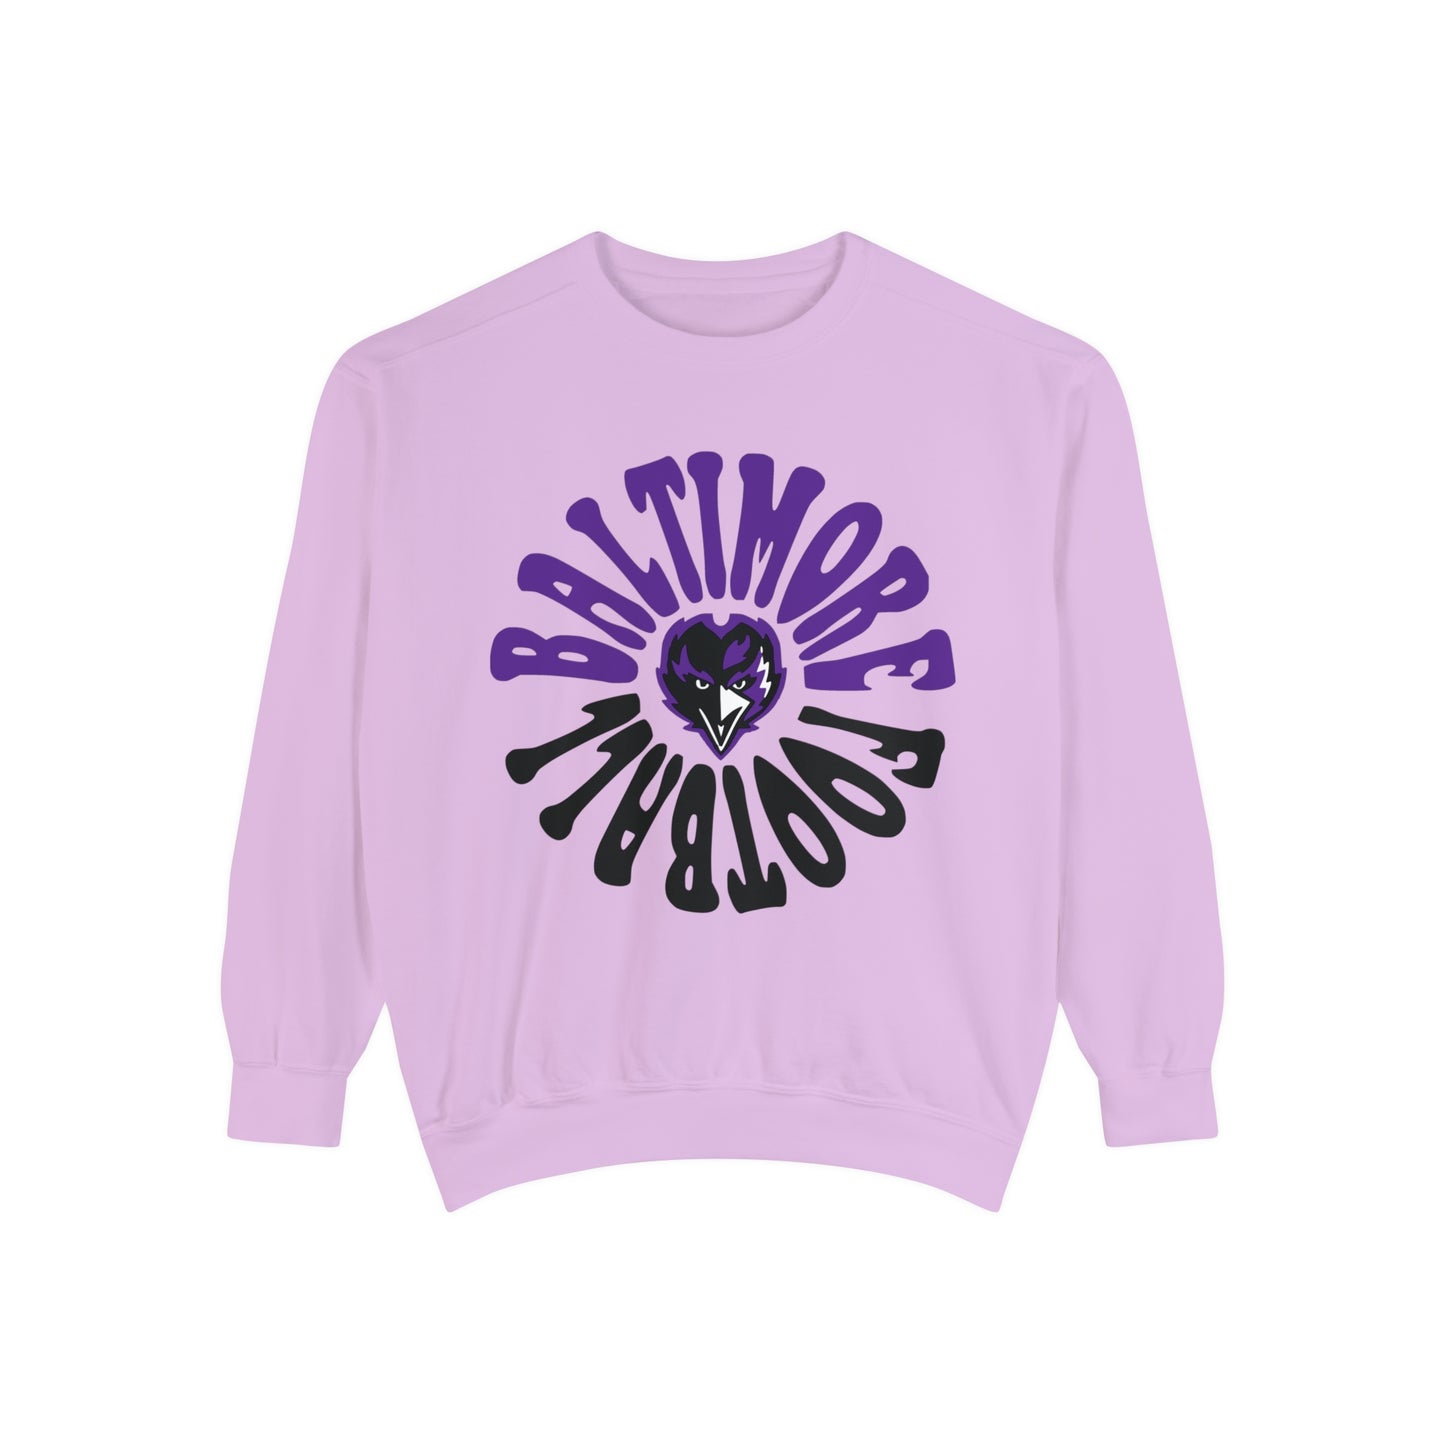 Purple Baltimore Ravens Crewneck Sweatshirt - Comfort Colors NFL Football  - Sweatshirt - Purple & Gray - Design 2